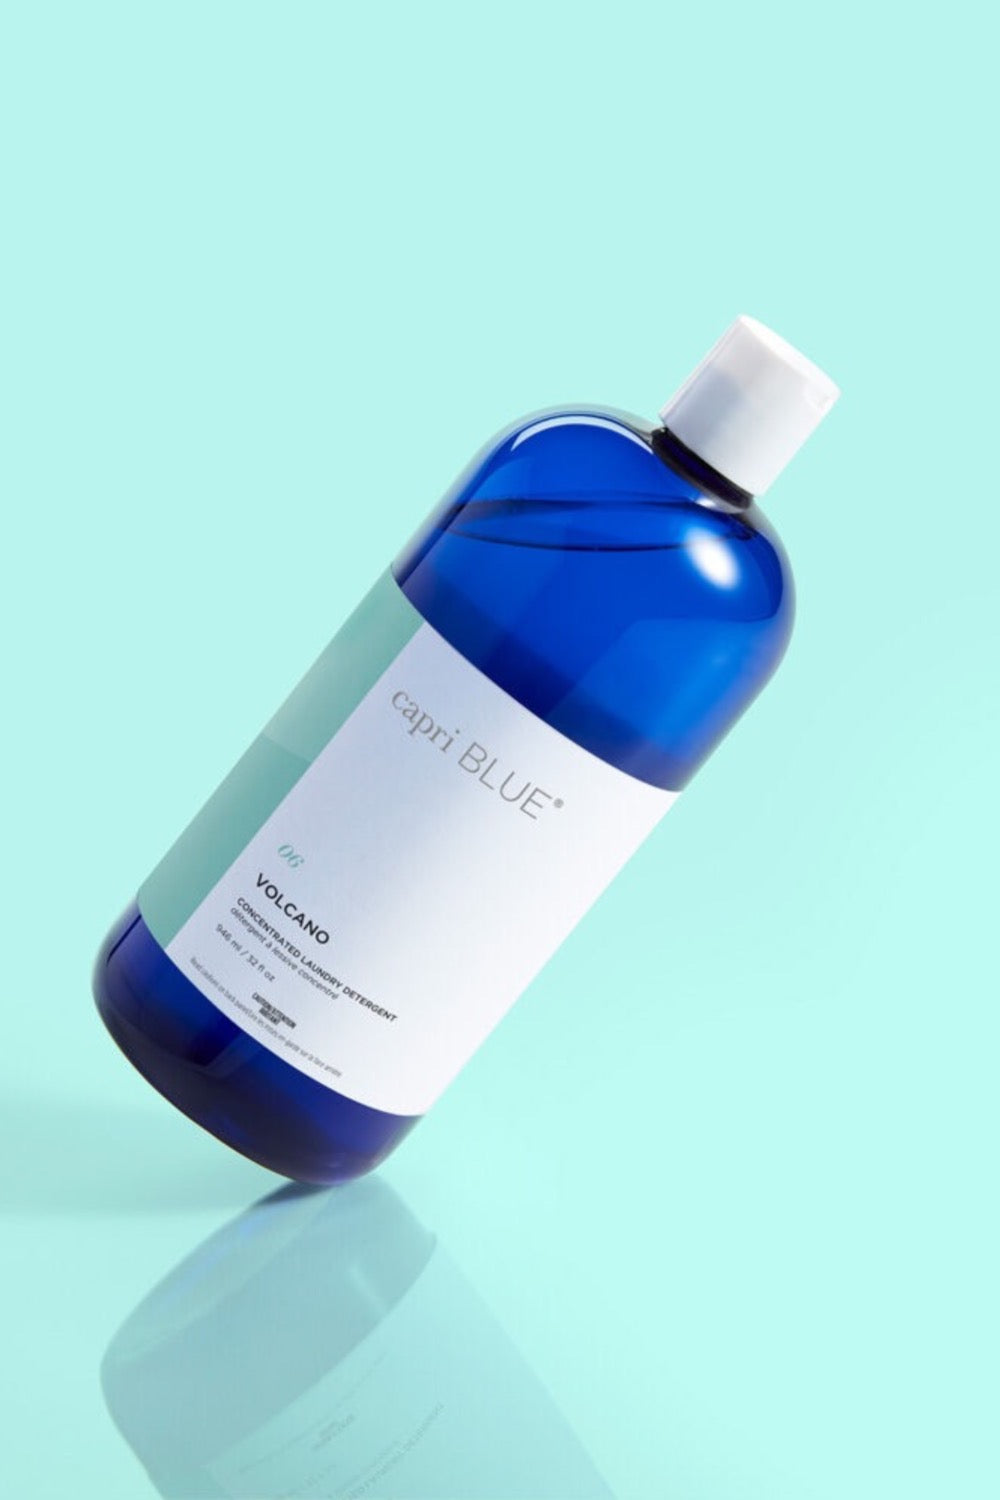 Capri Blue: Volcano Concentrated Laundry Detergent | Makk Fashions